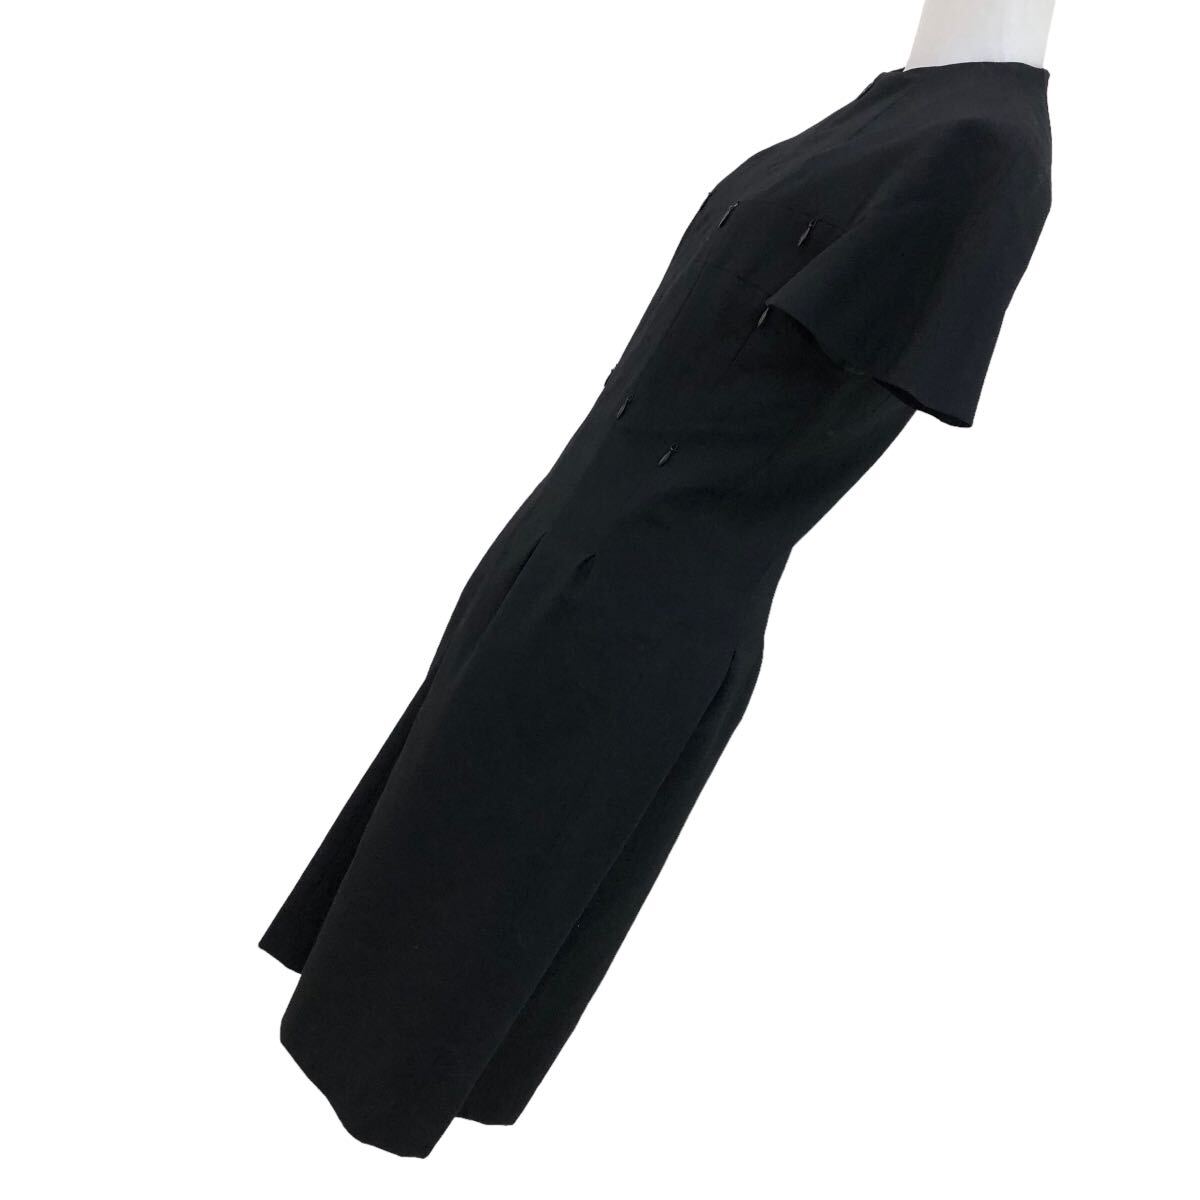 NS125 made in Japan I.S sunaokuwahara Sunao Kuwahara One-piece short sleeves One-piece flair skirt short sleeves lady's M black black 